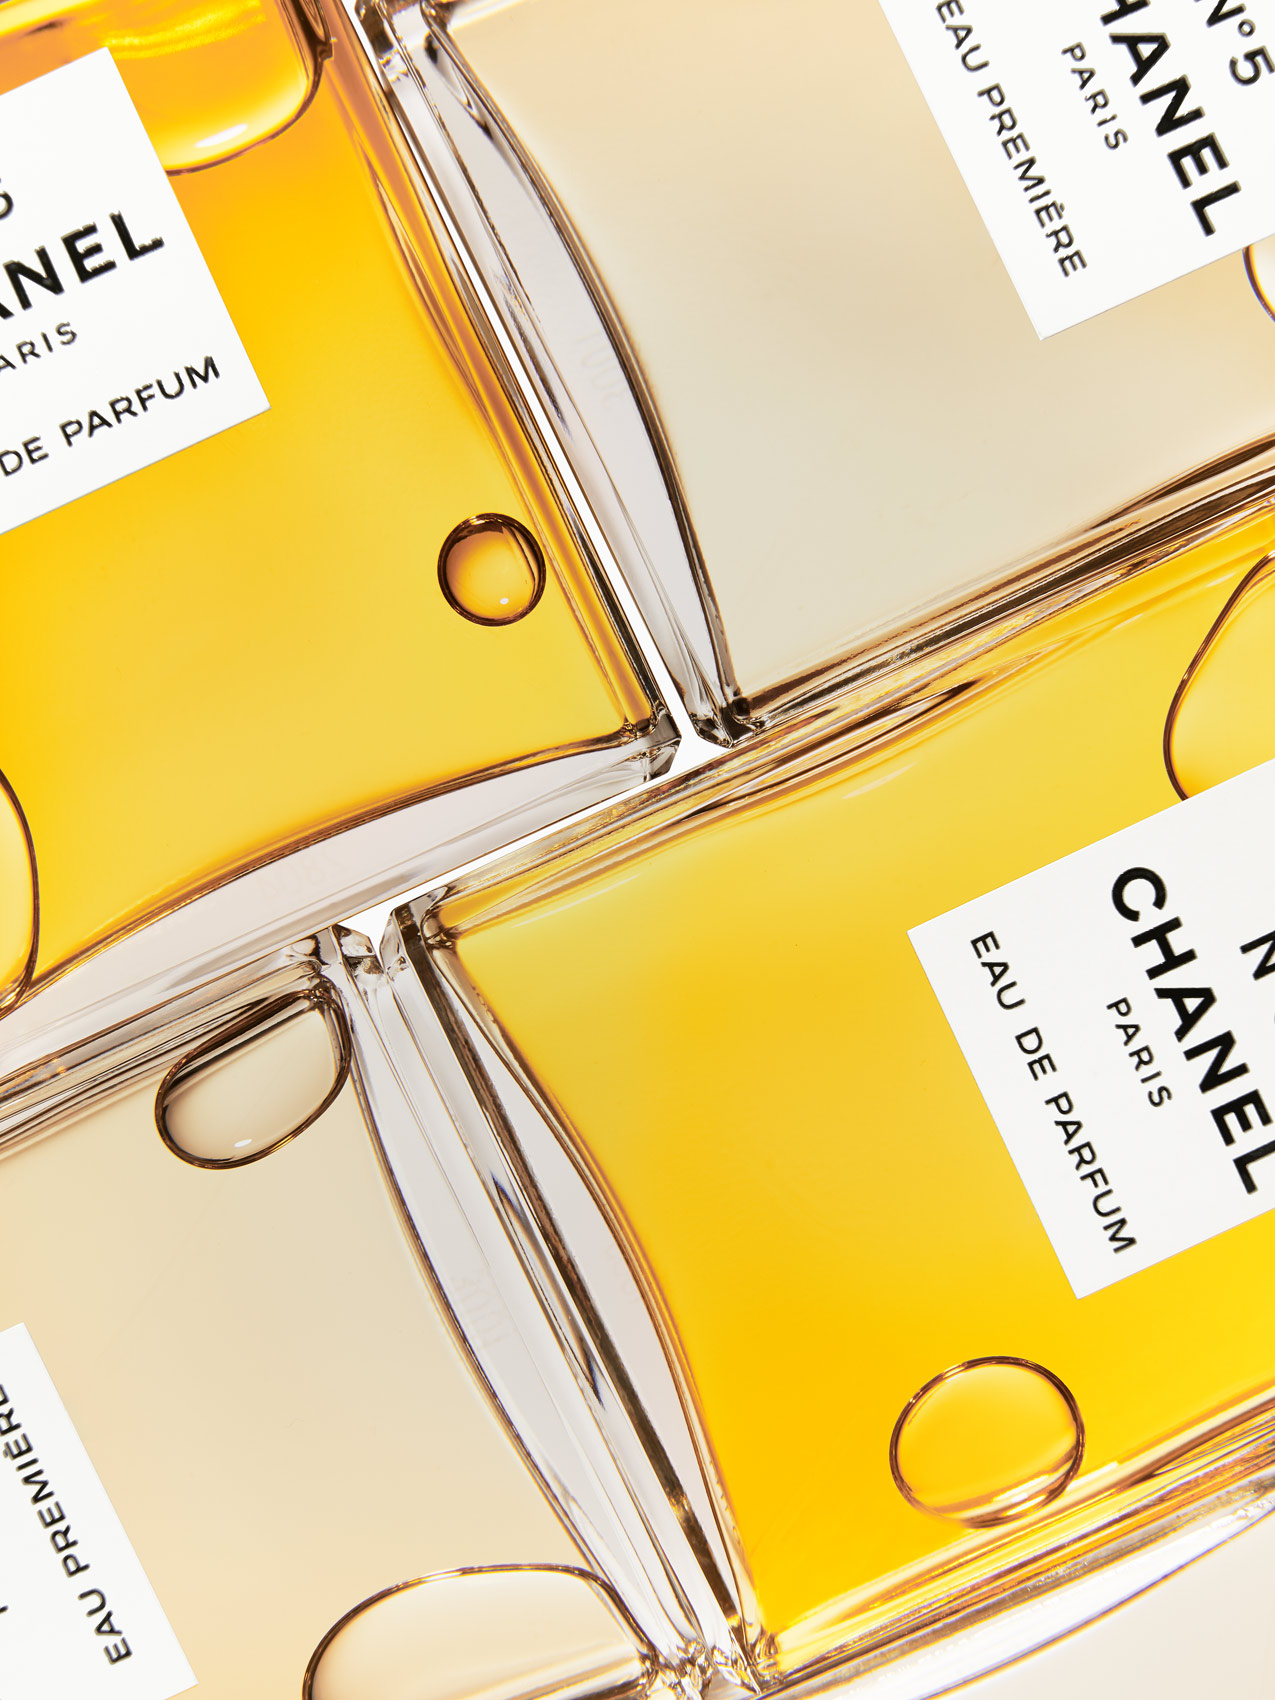 Chanel-Group1_01_WEB_StillLife